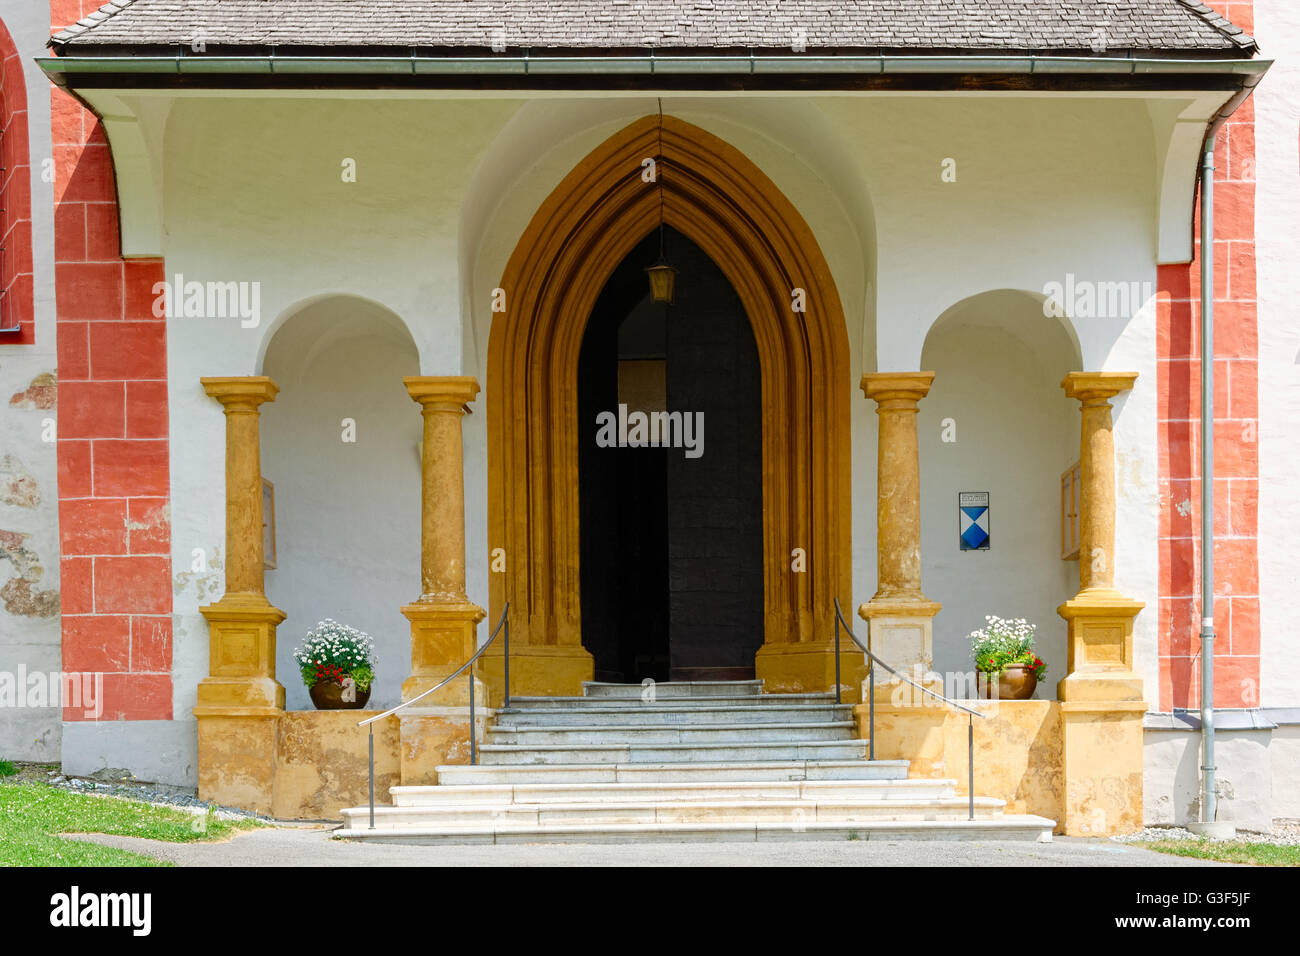 Entrance of a church in Austria Stock Photo